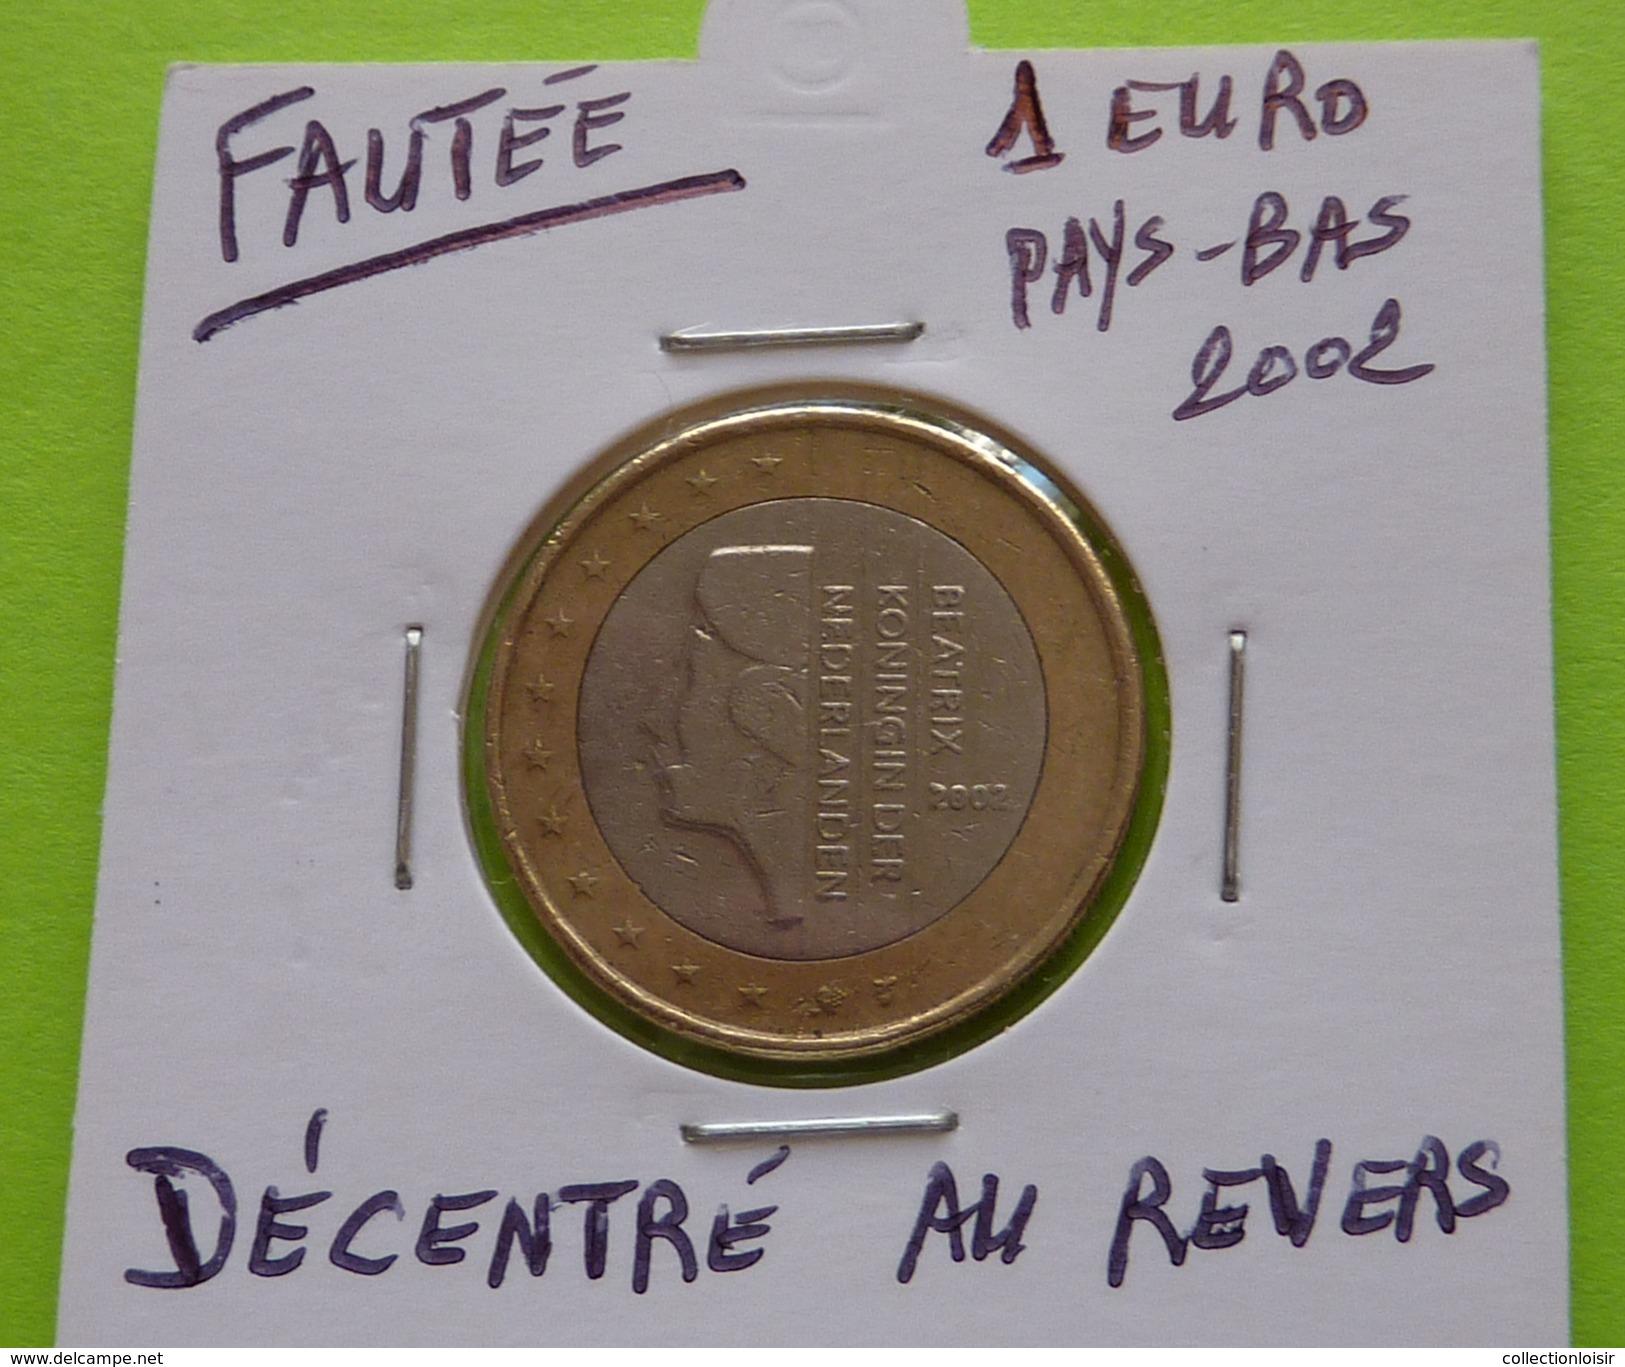 FAUTEE ****  1 EURO  PAYS - BAS  2002  ( 2 Photos ) - Errors And Oddities